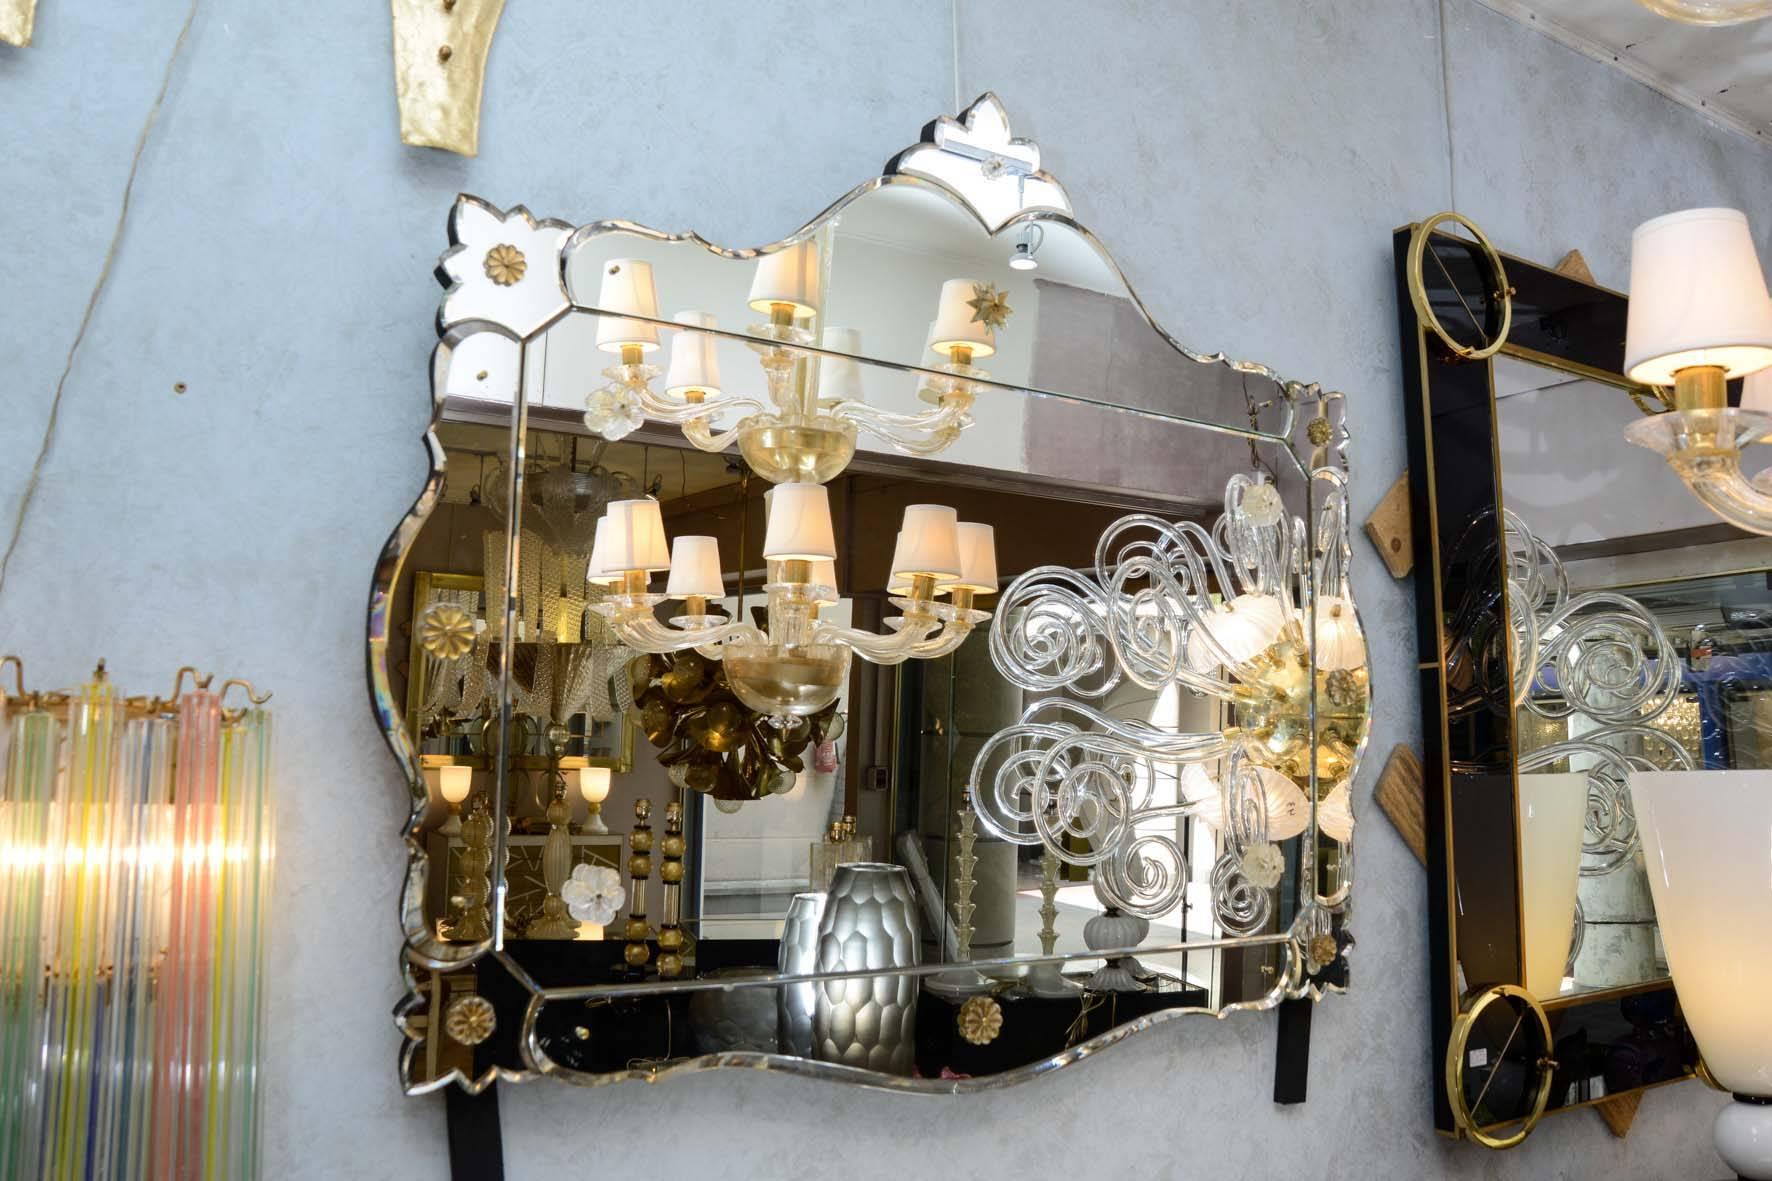 Decorative mirror.